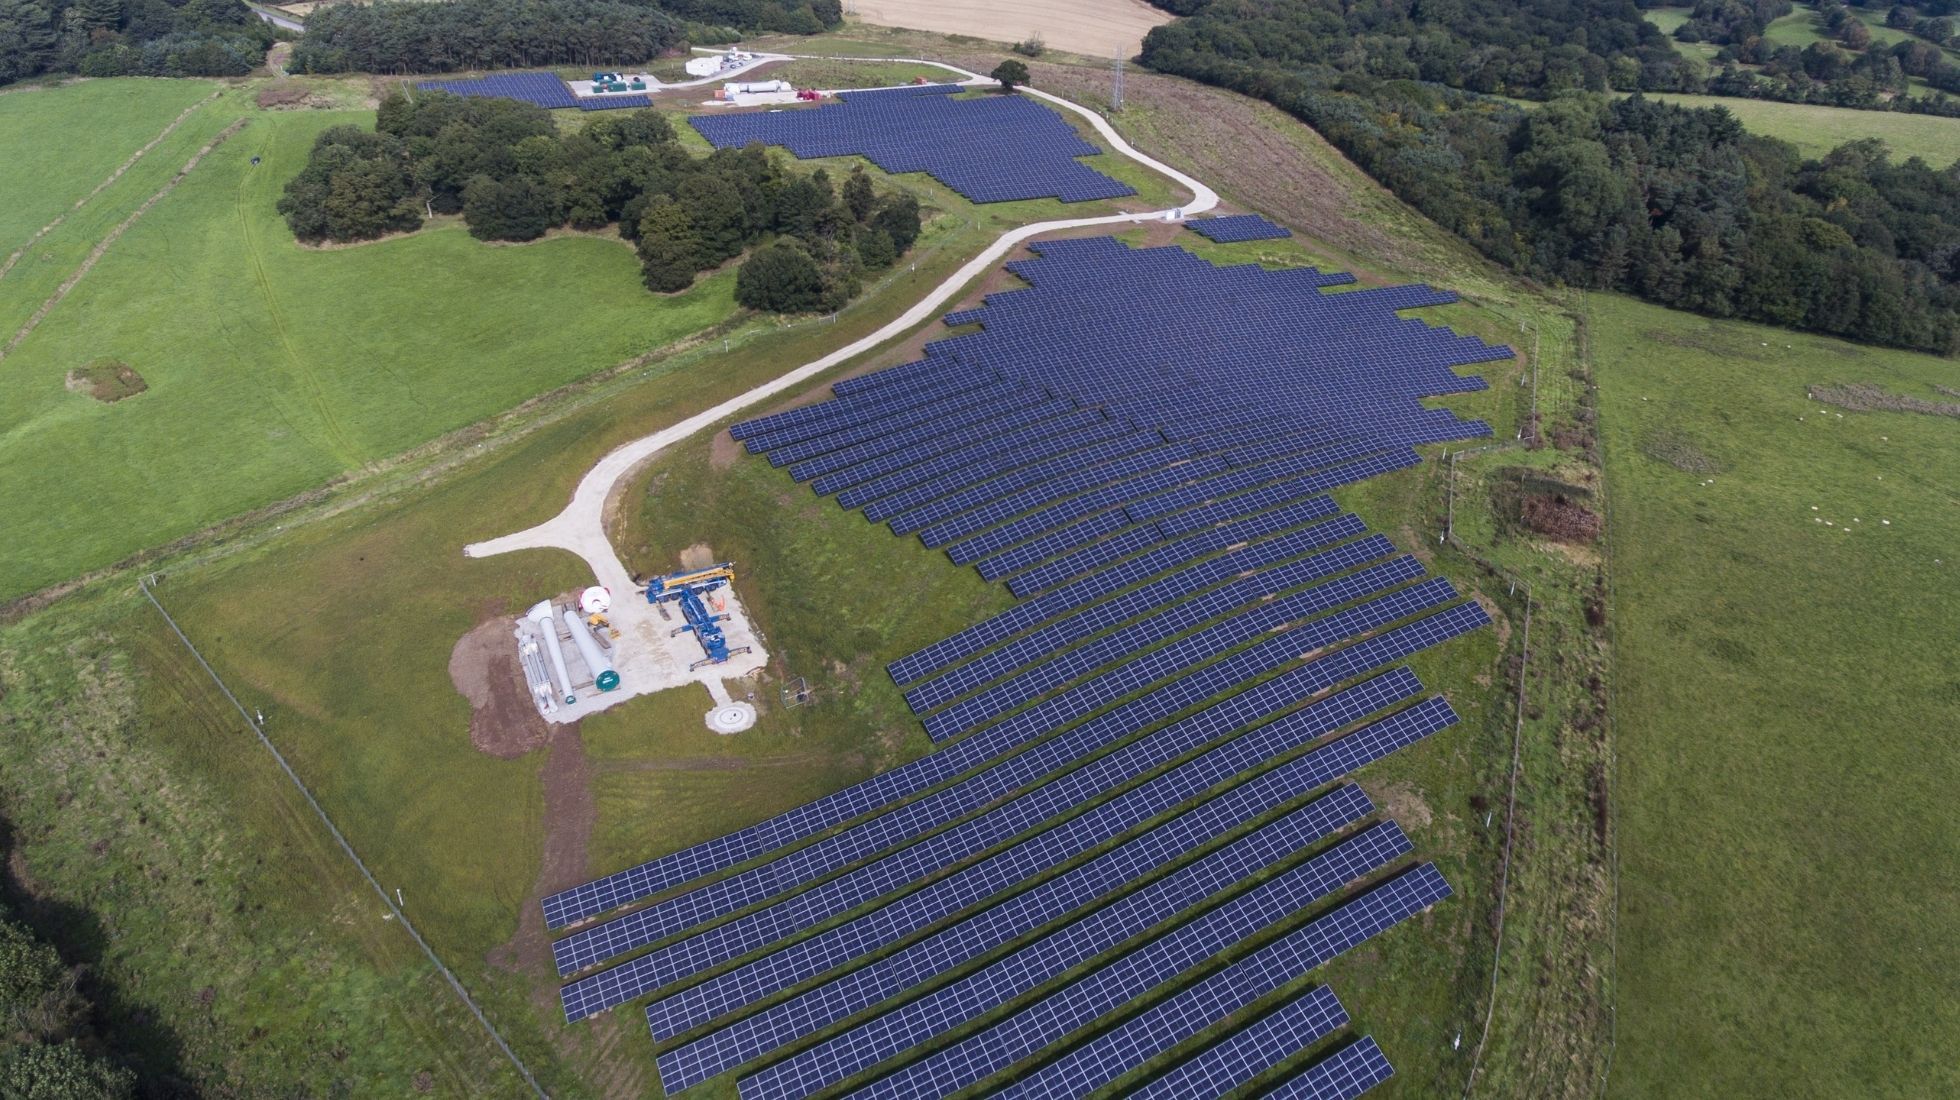 Keele University takes the next step towards carbon neutrality with solar power